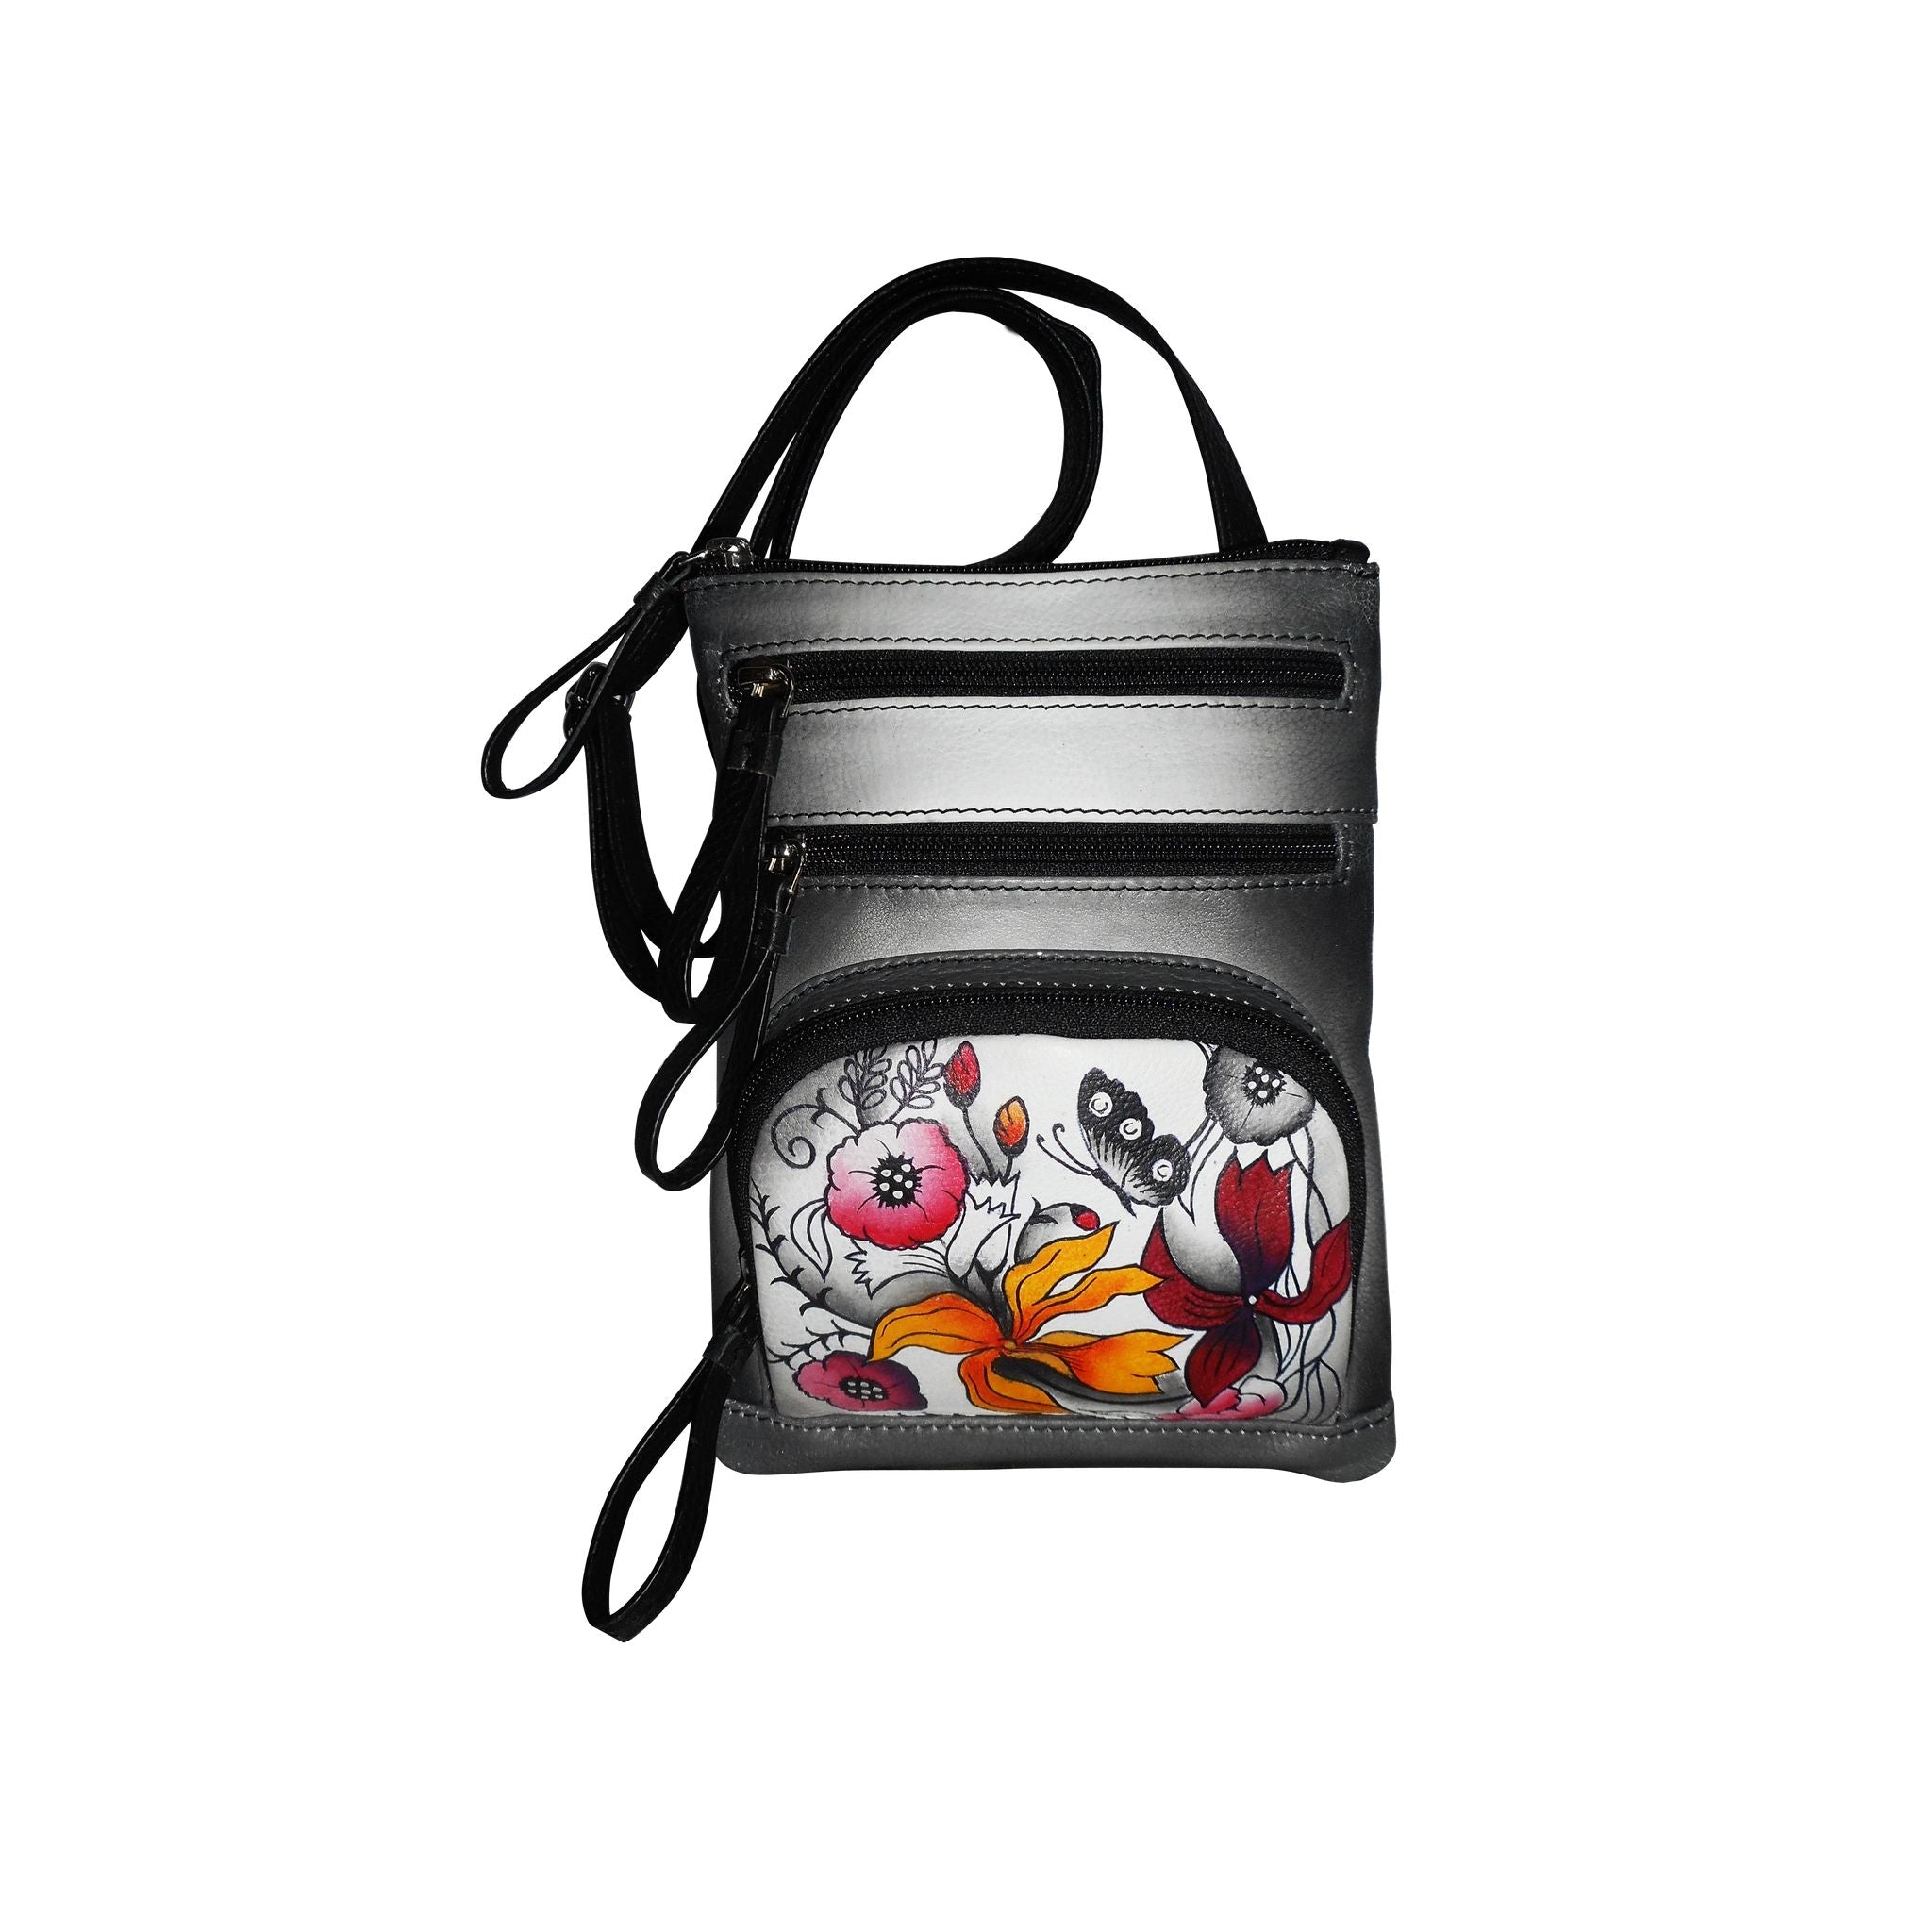 Merlot Leather Bag With Custom LOVE Graffiti Art, 1950s  Black leather  handbags, Hand painted bags handbags, Leather